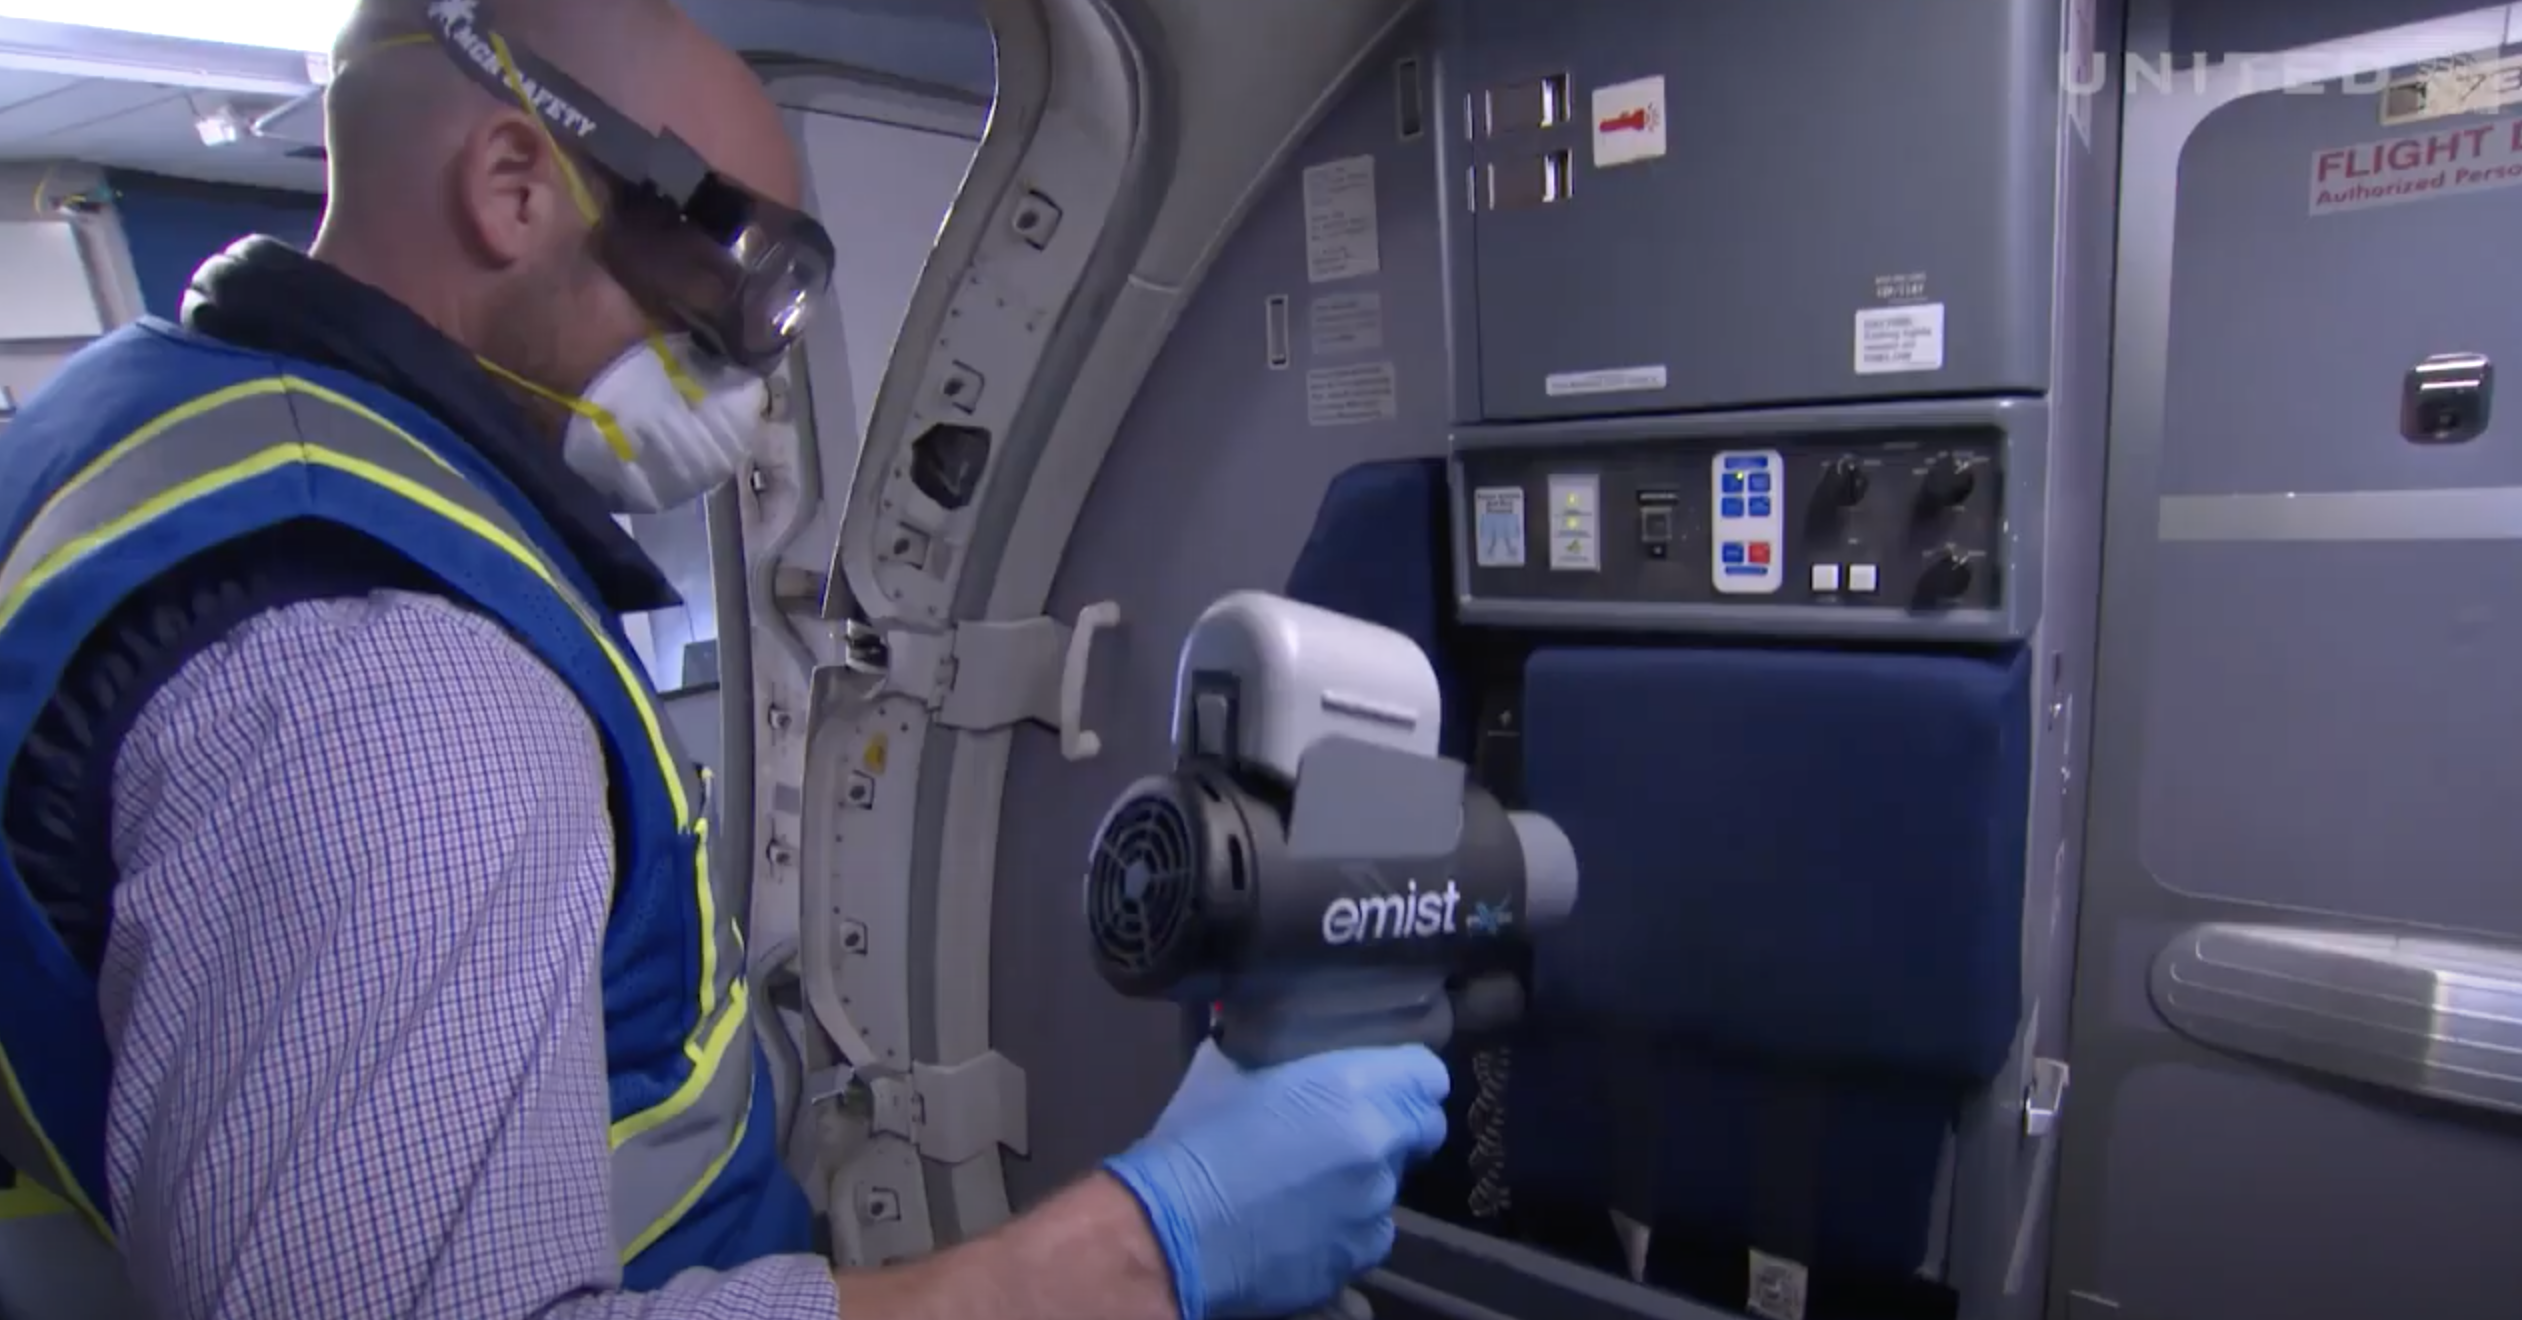 United Airlines Uses EMist’s Electrostatic Technology